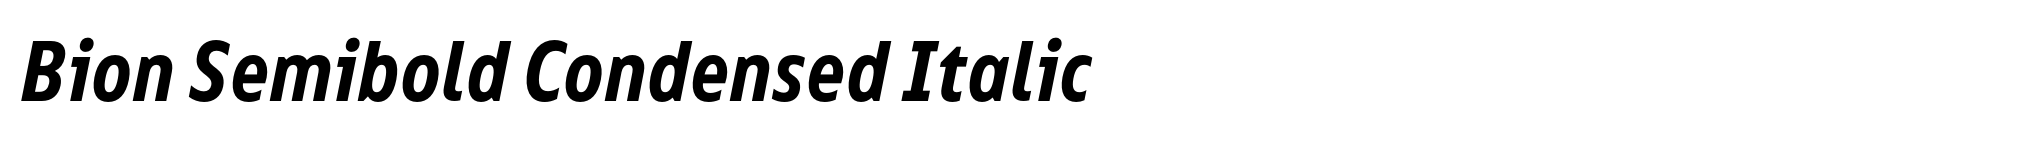 Bion Semibold Condensed Italic image